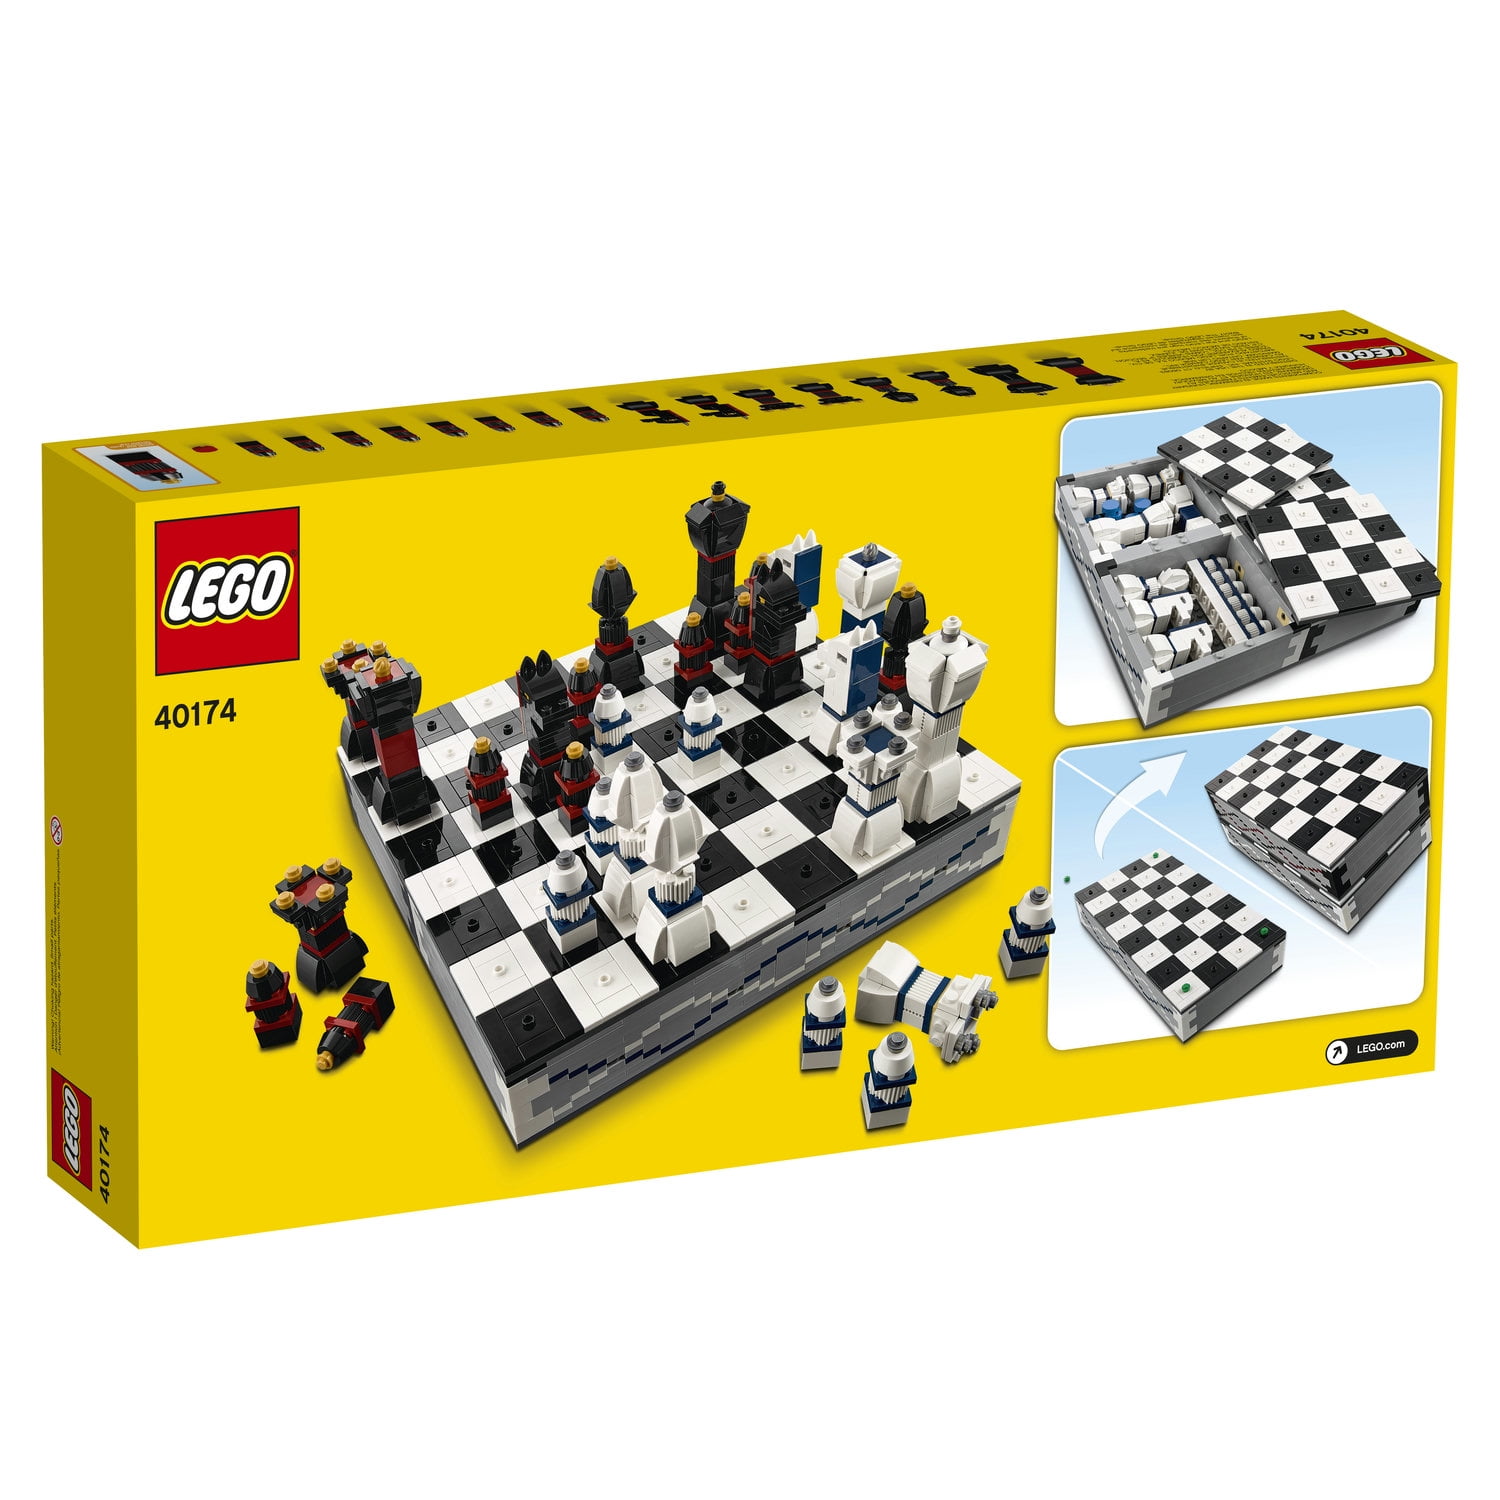 udsagnsord Muligt cigaret LEGO Iconic Chess 40174 Building Set (1450 Pieces) - Walmart.com